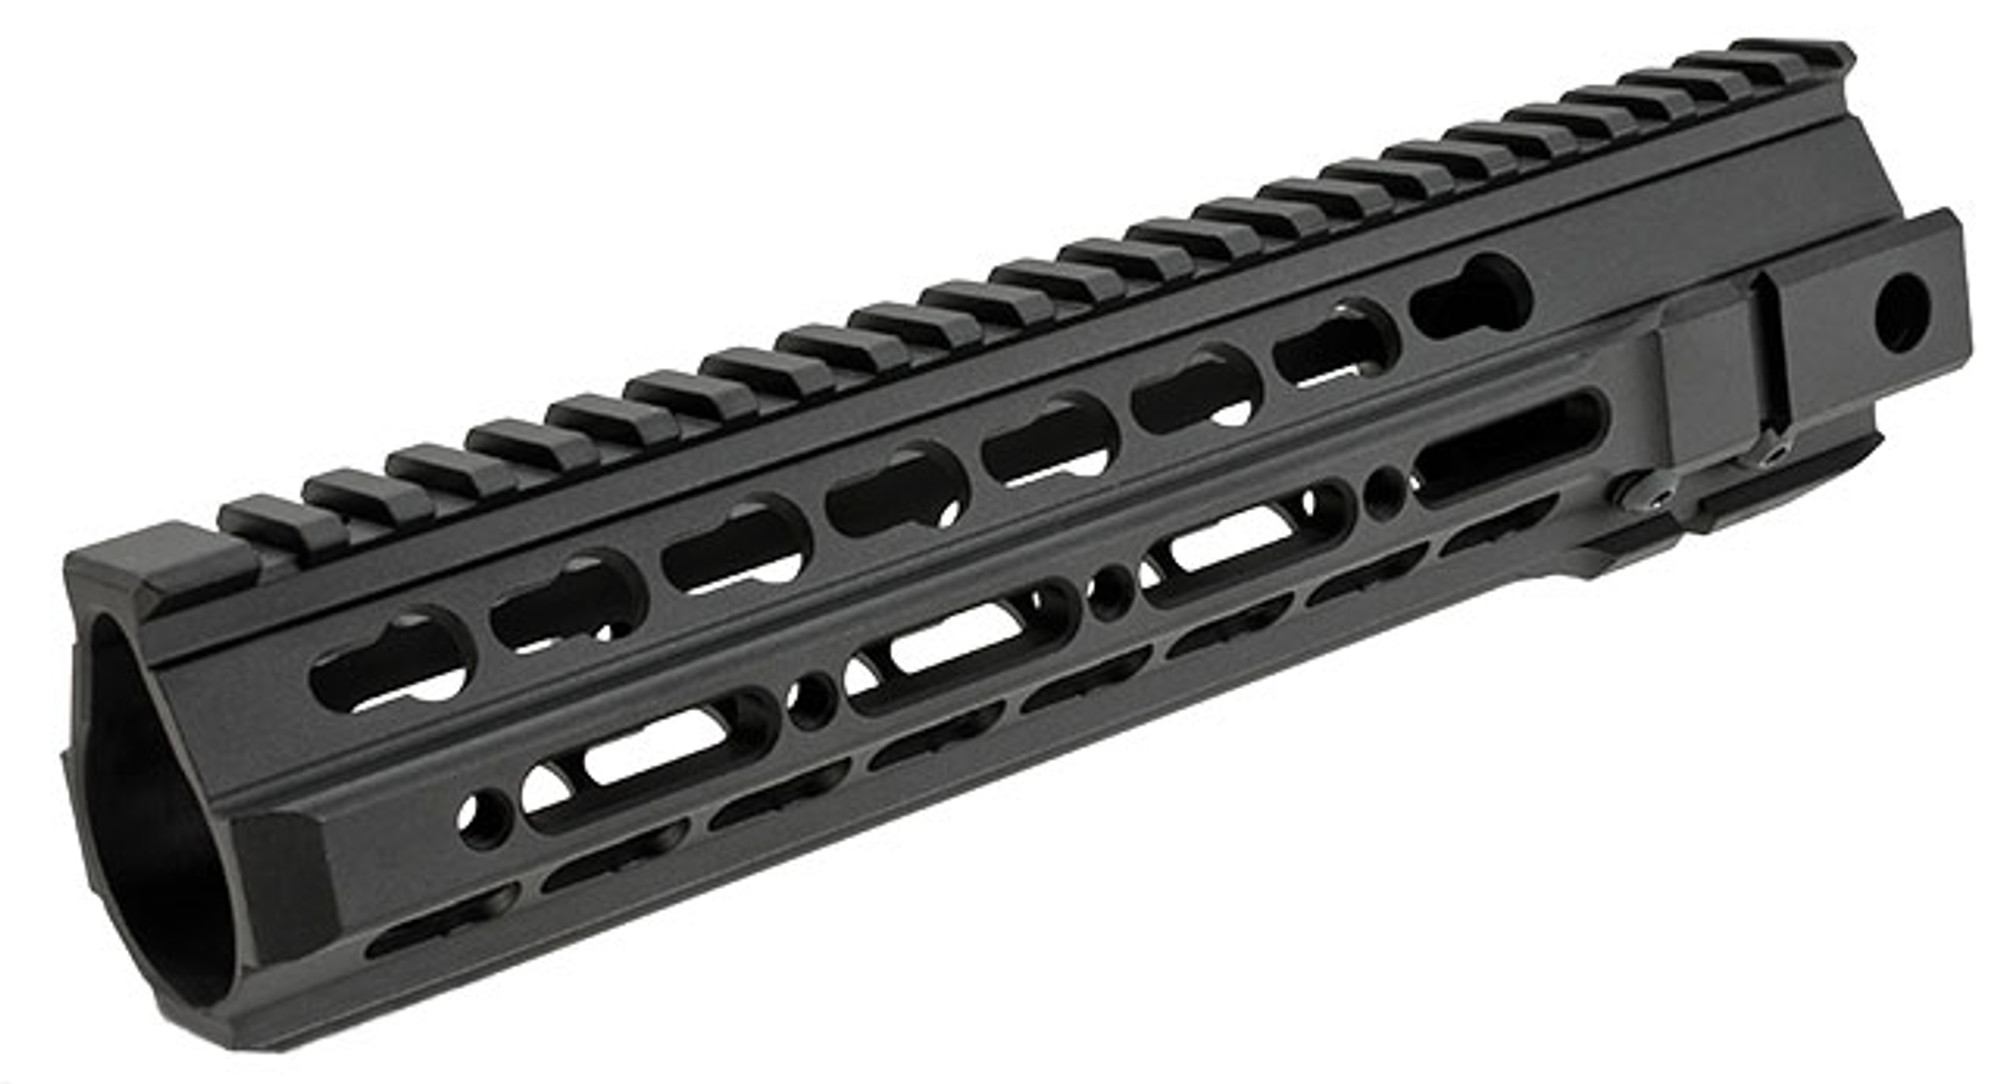 G&P TMR 9.5" Rail System for M4 / M16 Series Airsoft AEG Rifles (Short) - Black